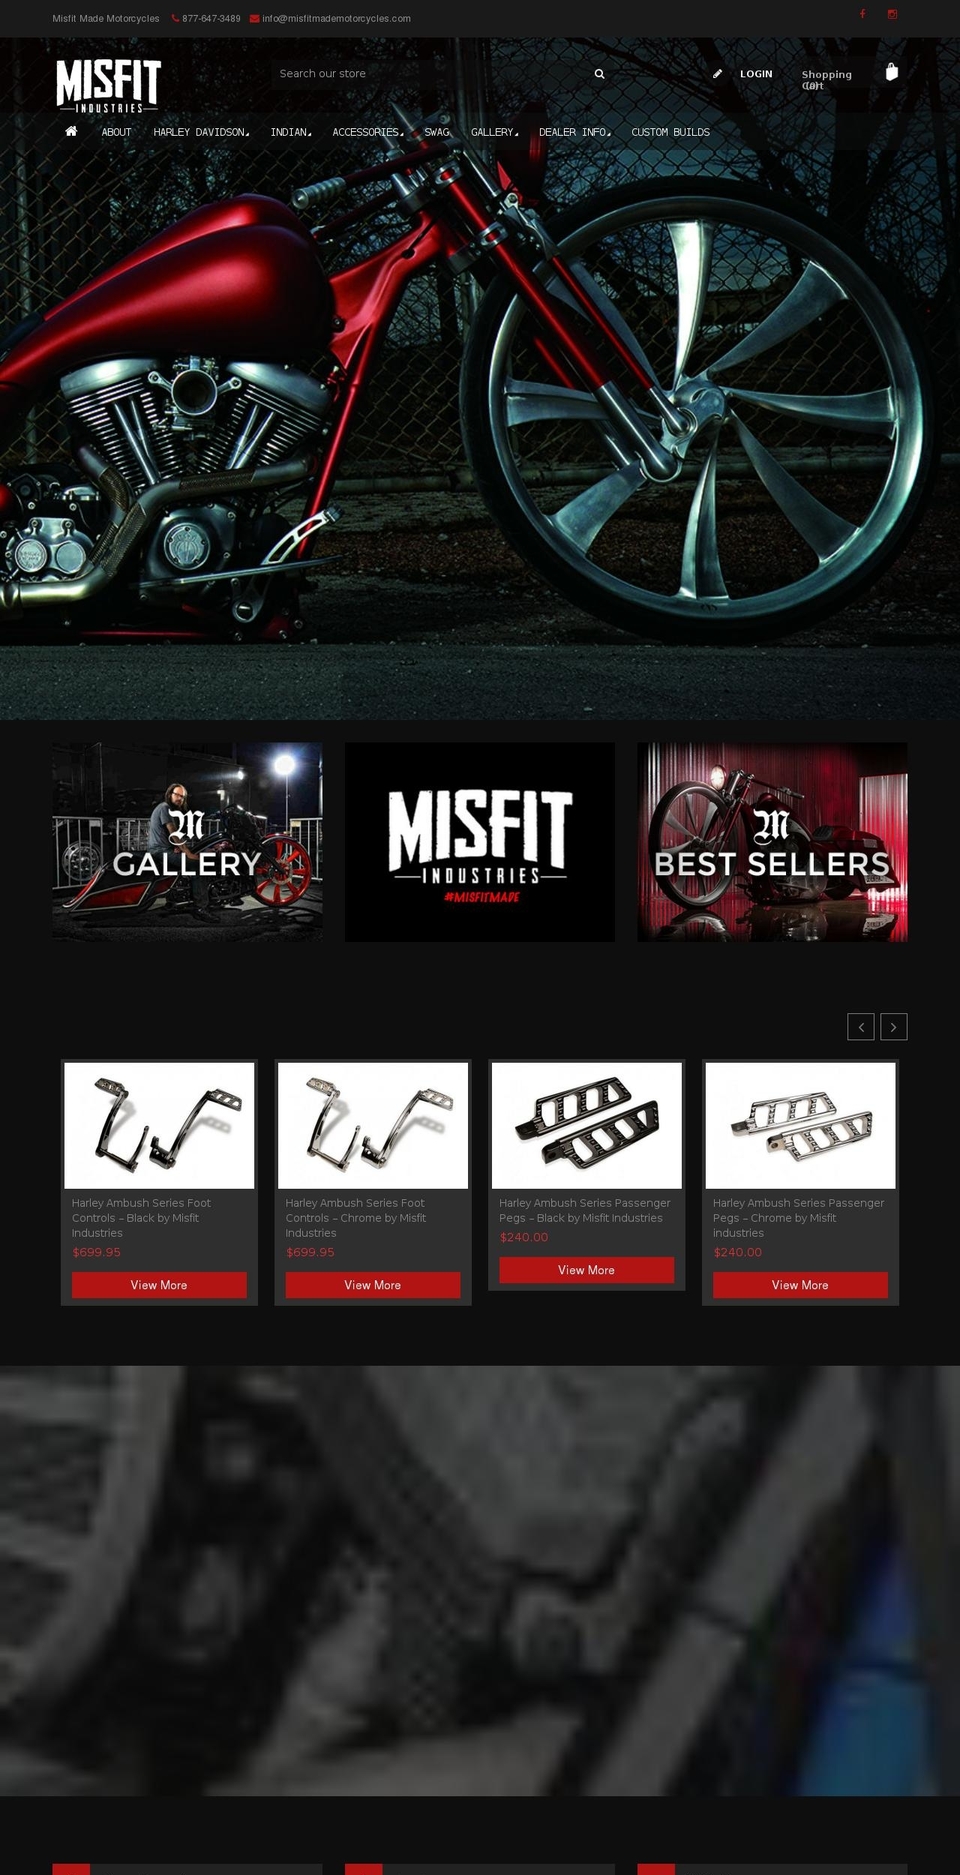 misfitindustries.ca shopify website screenshot